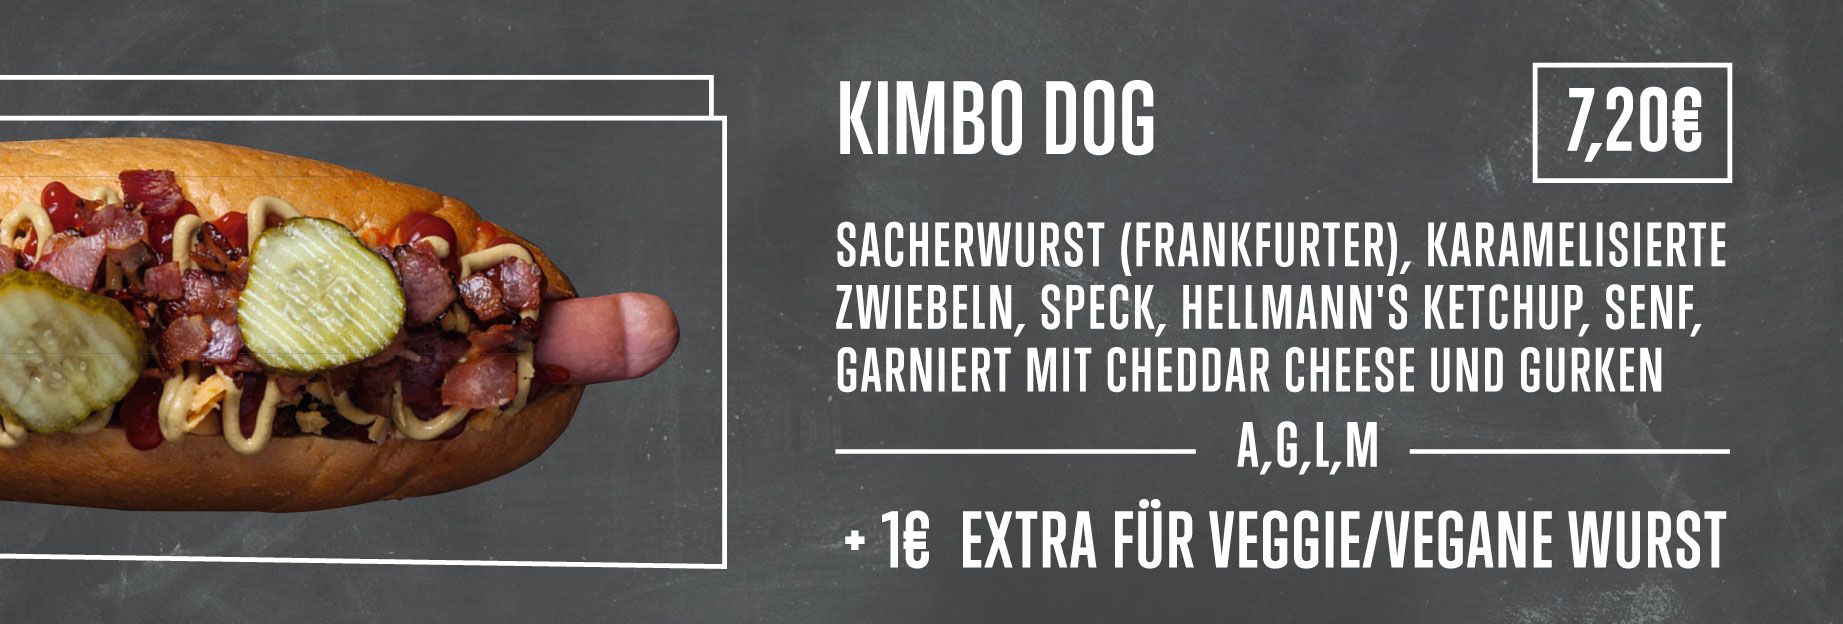 Kimbo Dogs Foodtruck#2